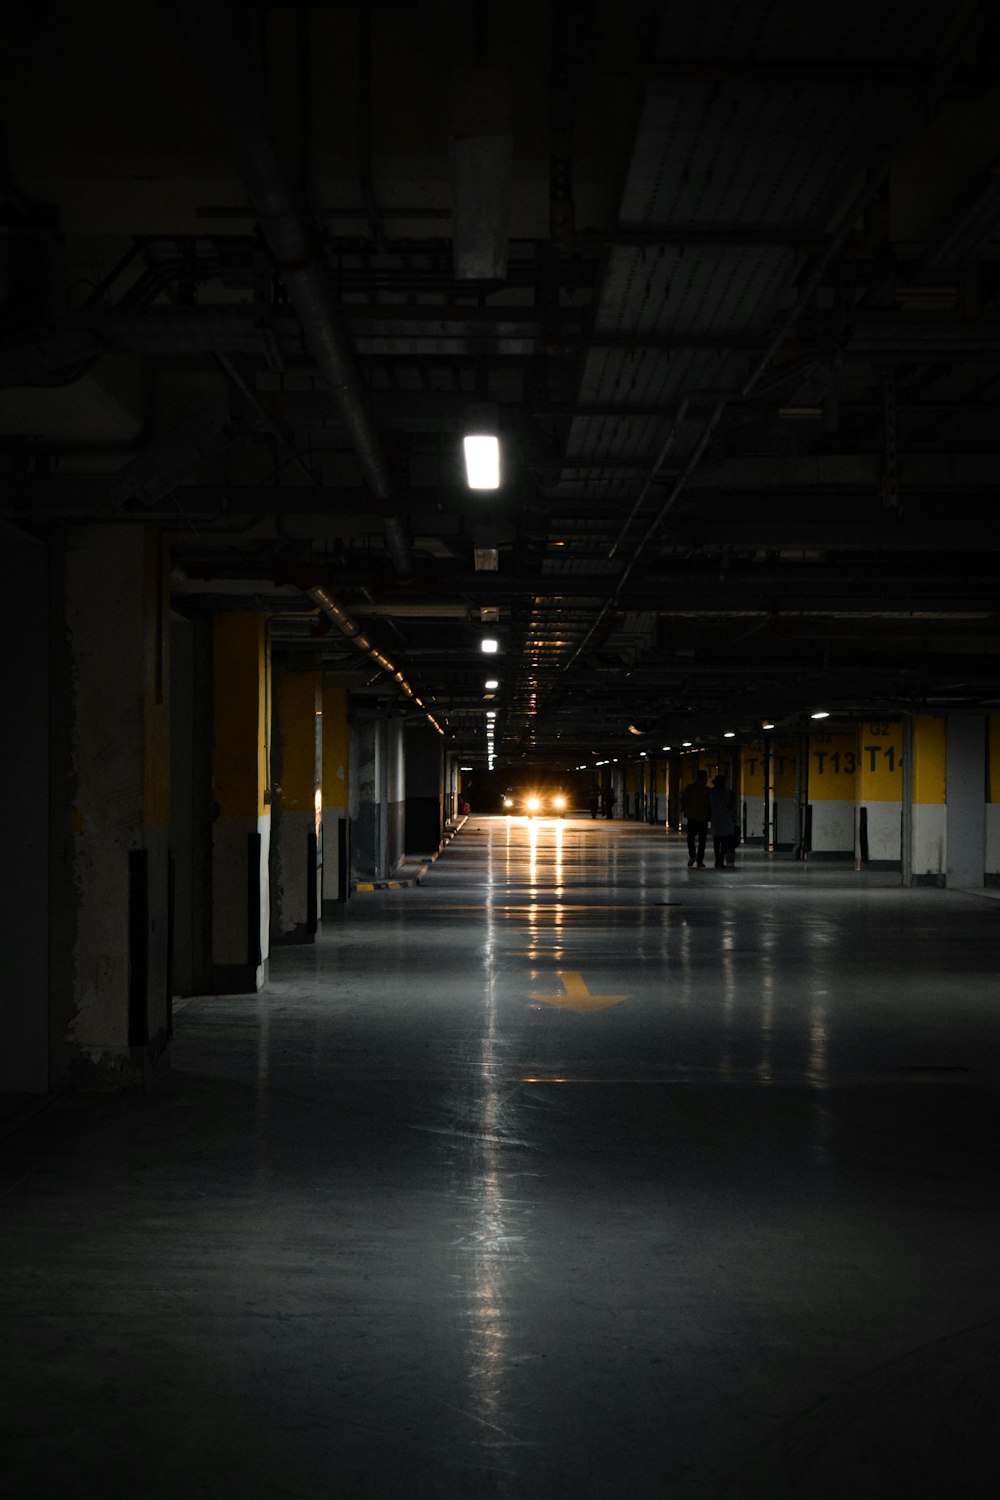 an empty parking garage with people walking in it